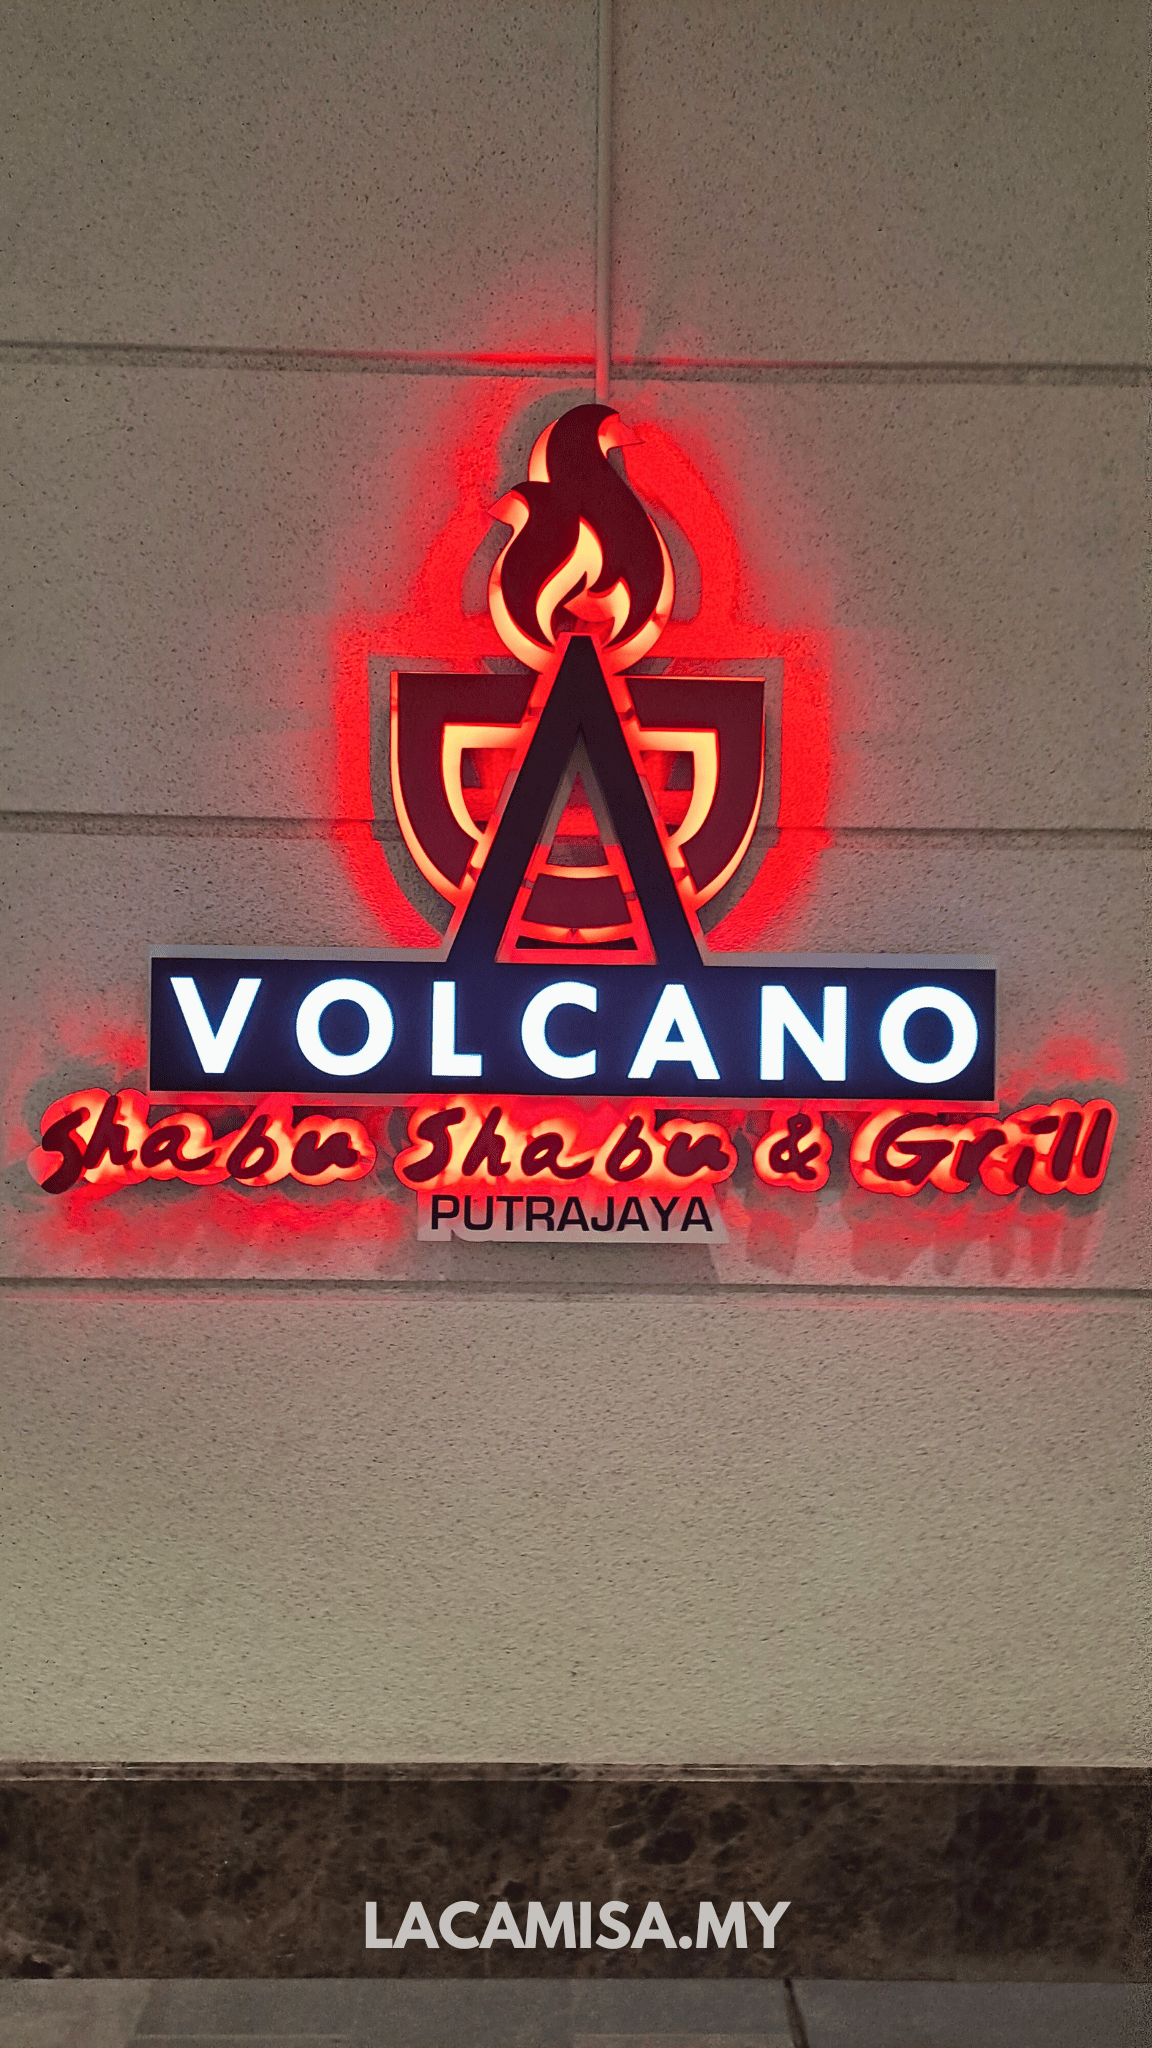 Volcano Shabu Shabu & Grill in Shaftsbury, Putrajaya